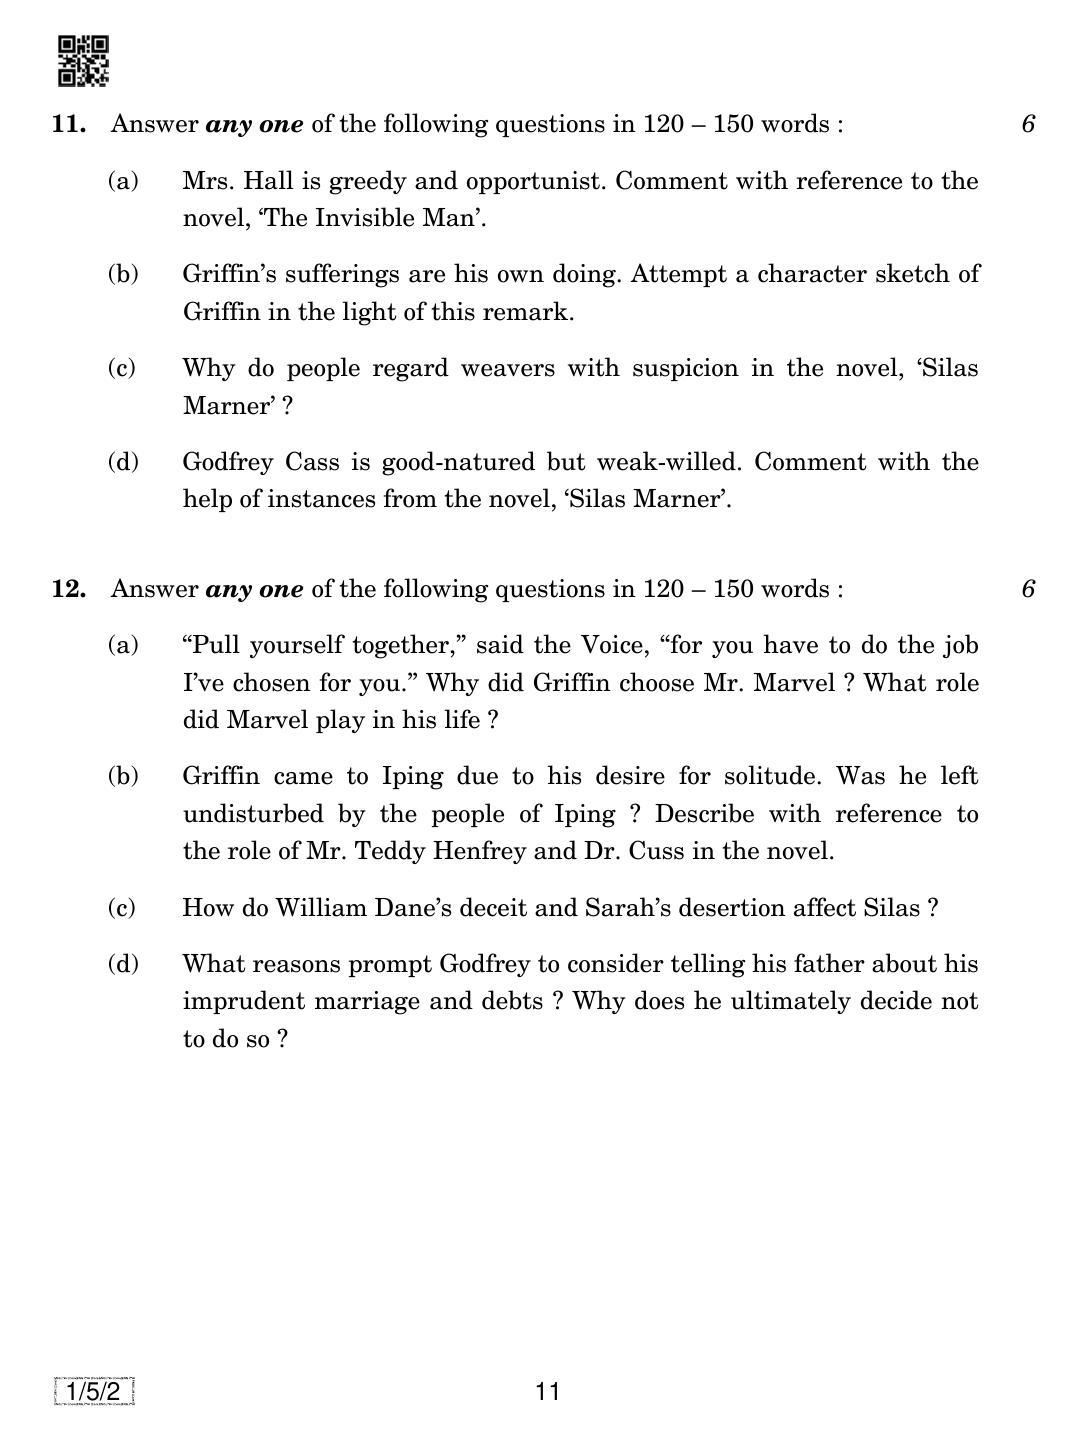 CBSE Class 12 1-5-2 English Core 2019 Question Paper - Page 11